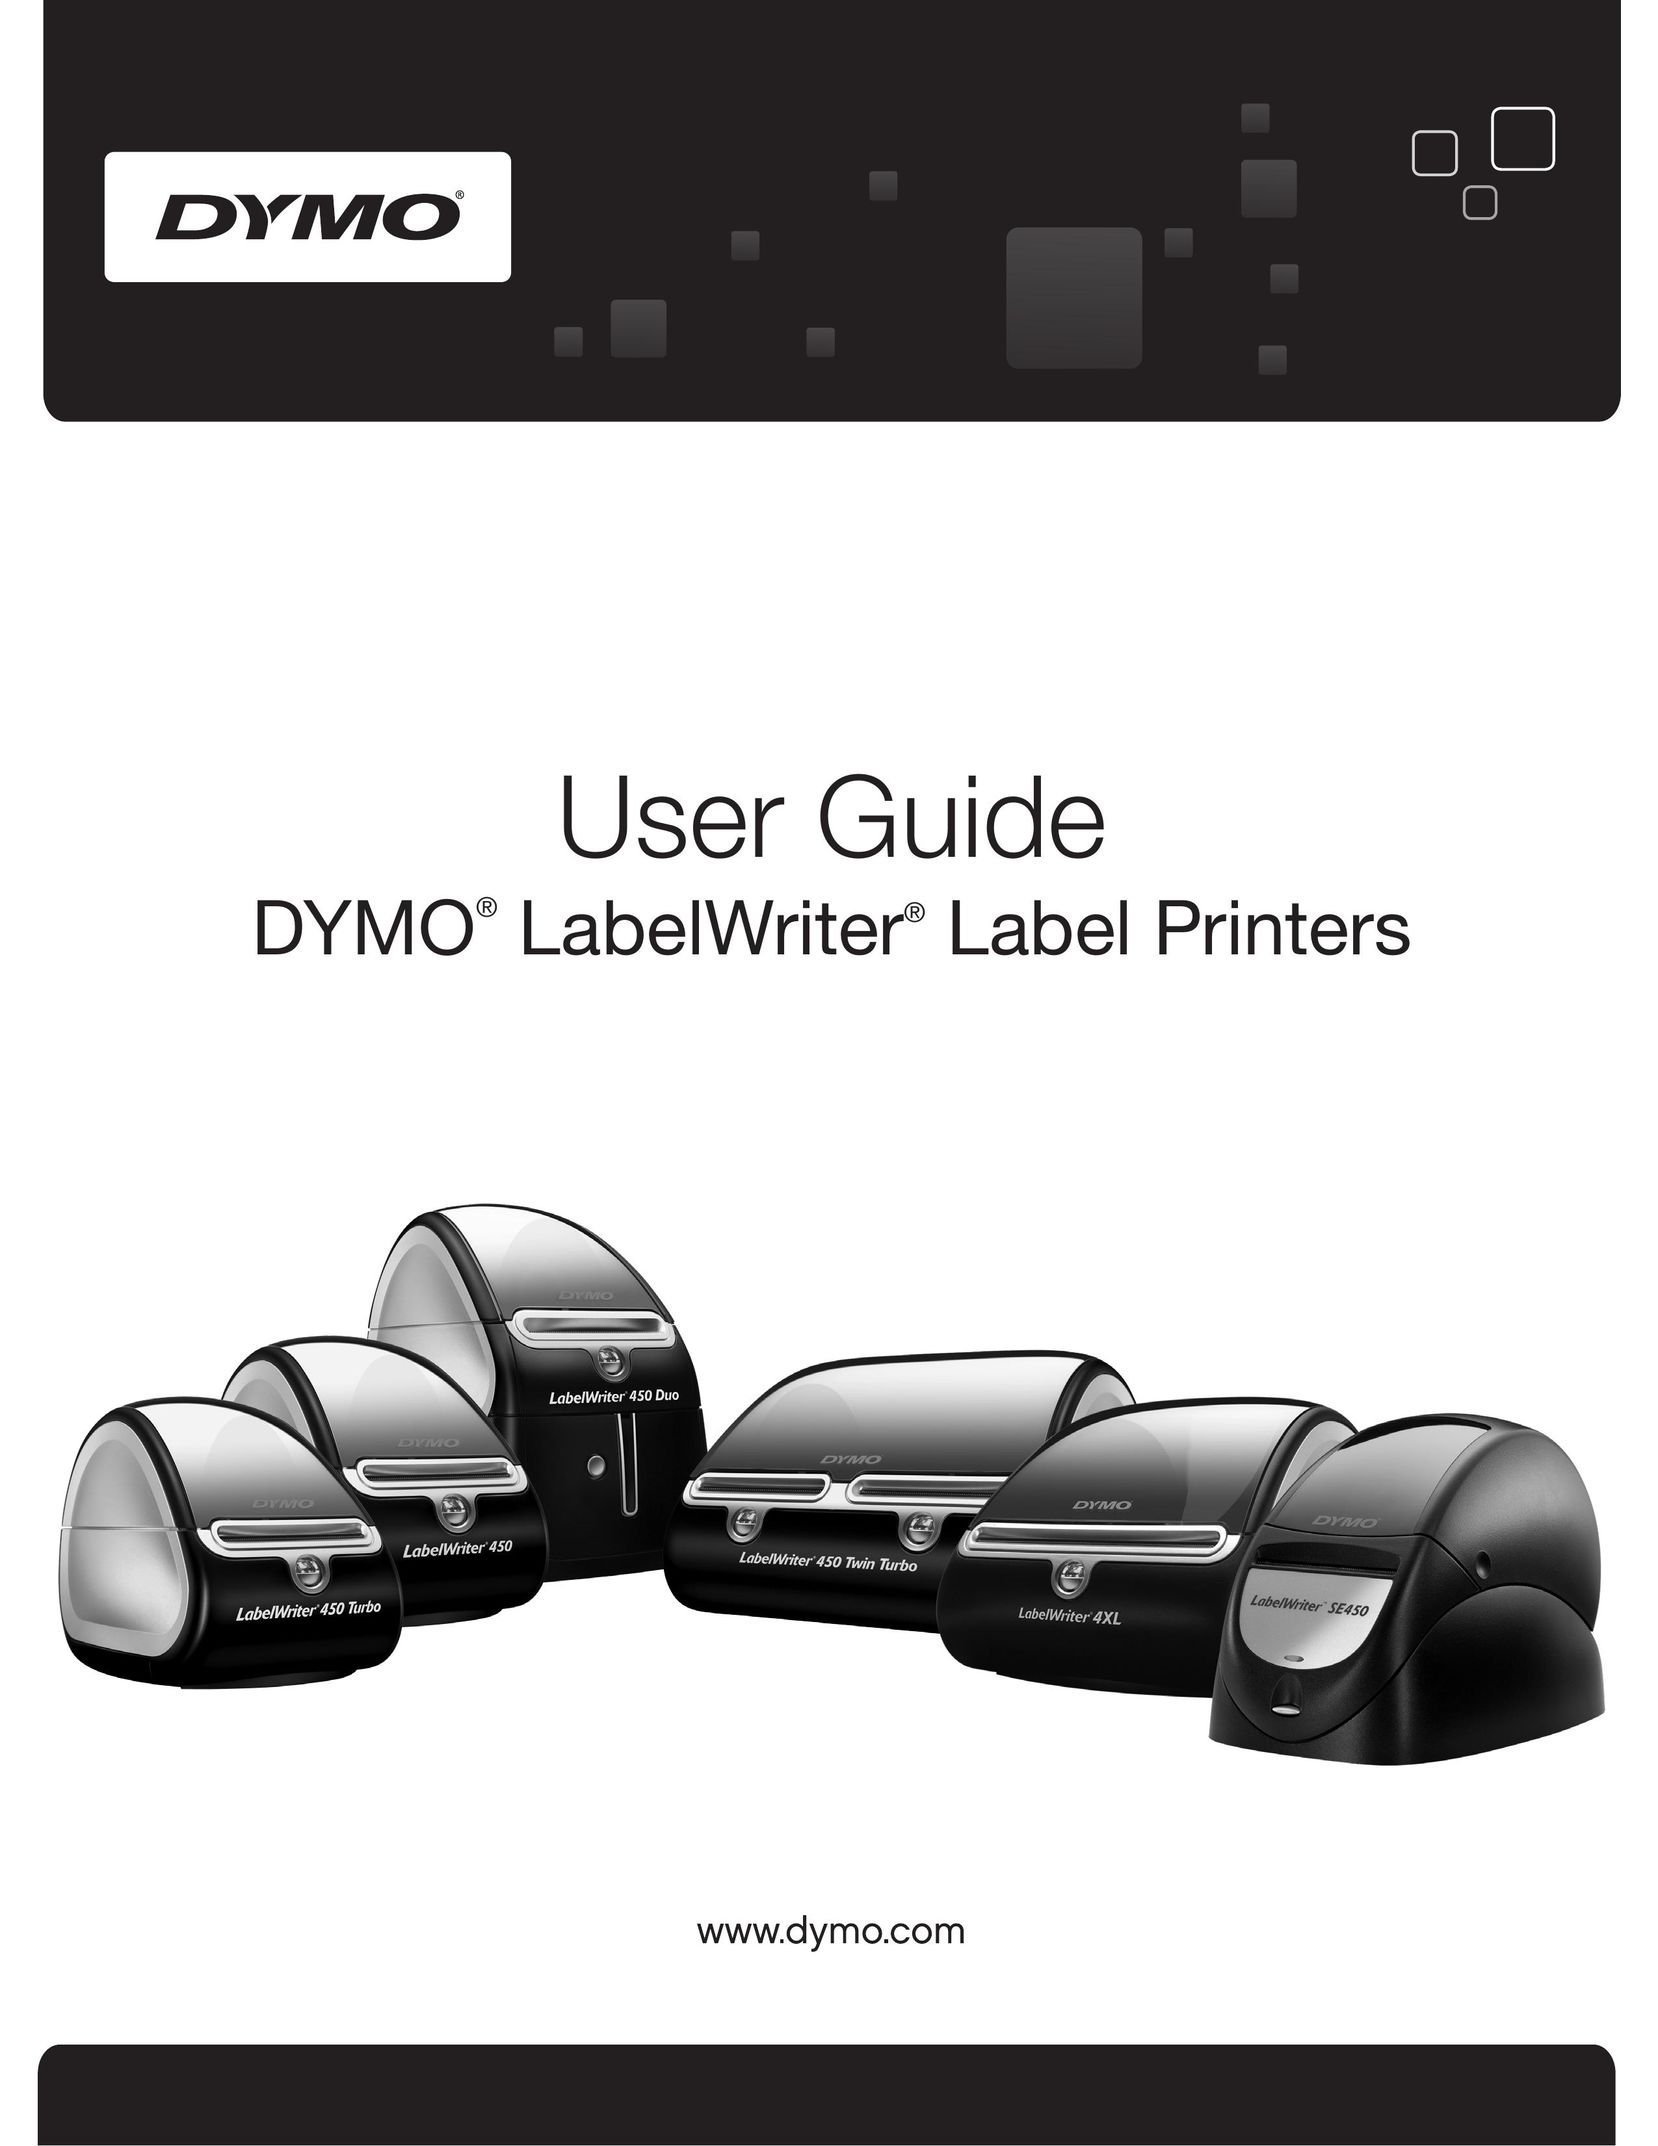 Dymo 4XL Label Maker User Manual